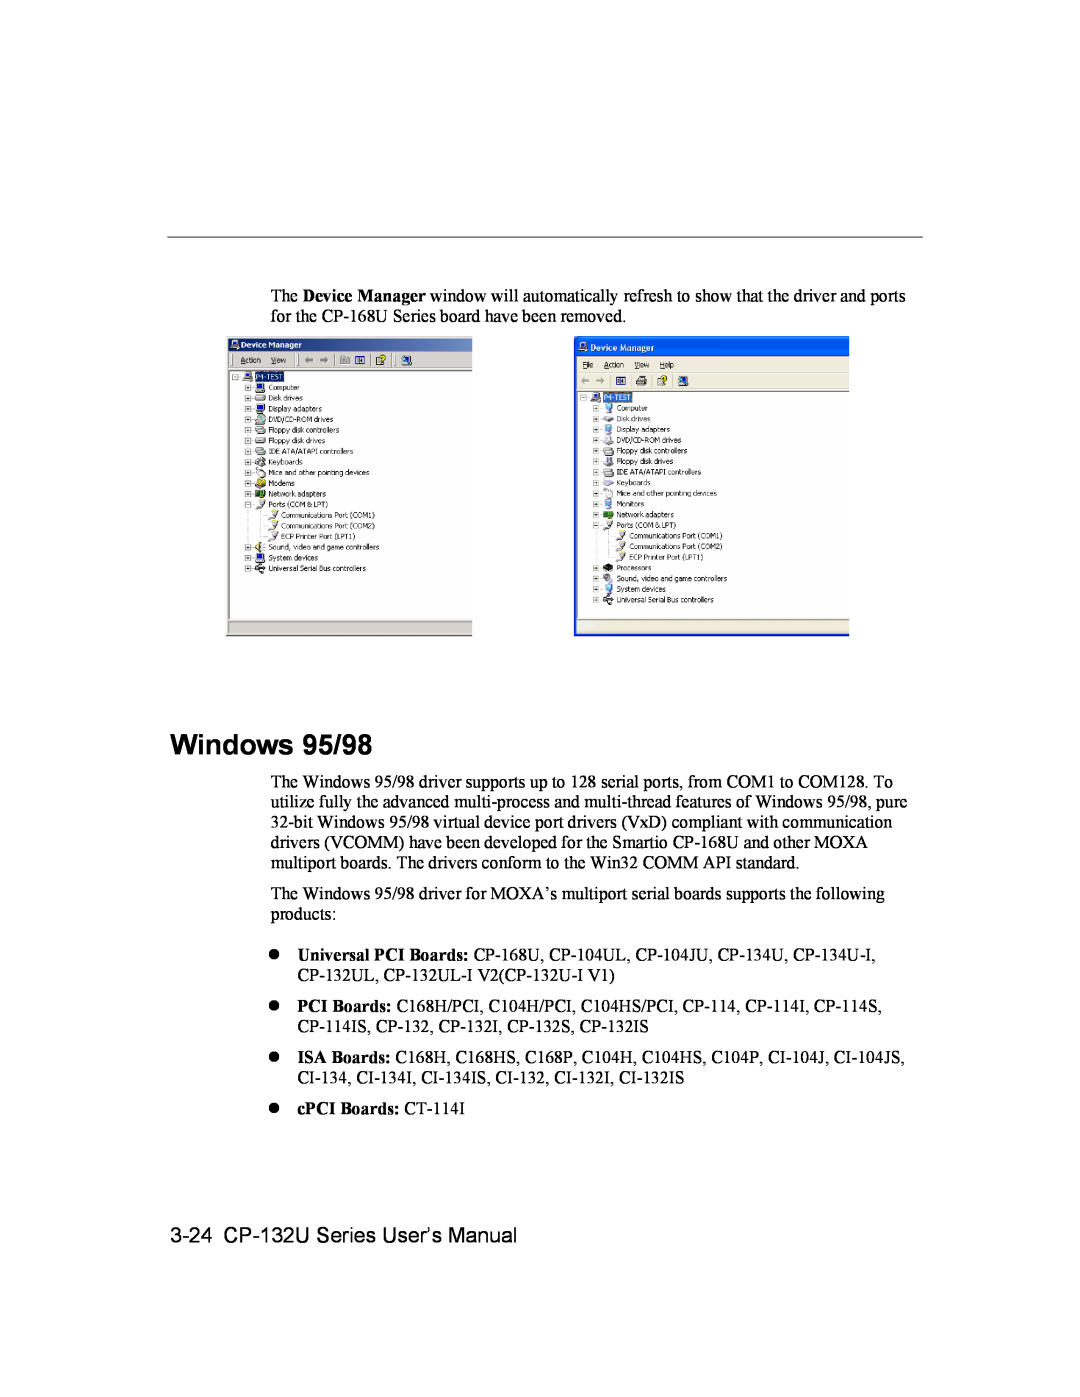 Moxa Technologies user manual Windows 95/98, 3-24 CP-132U Series User’s Manual, cPCI Boards CT-114I 